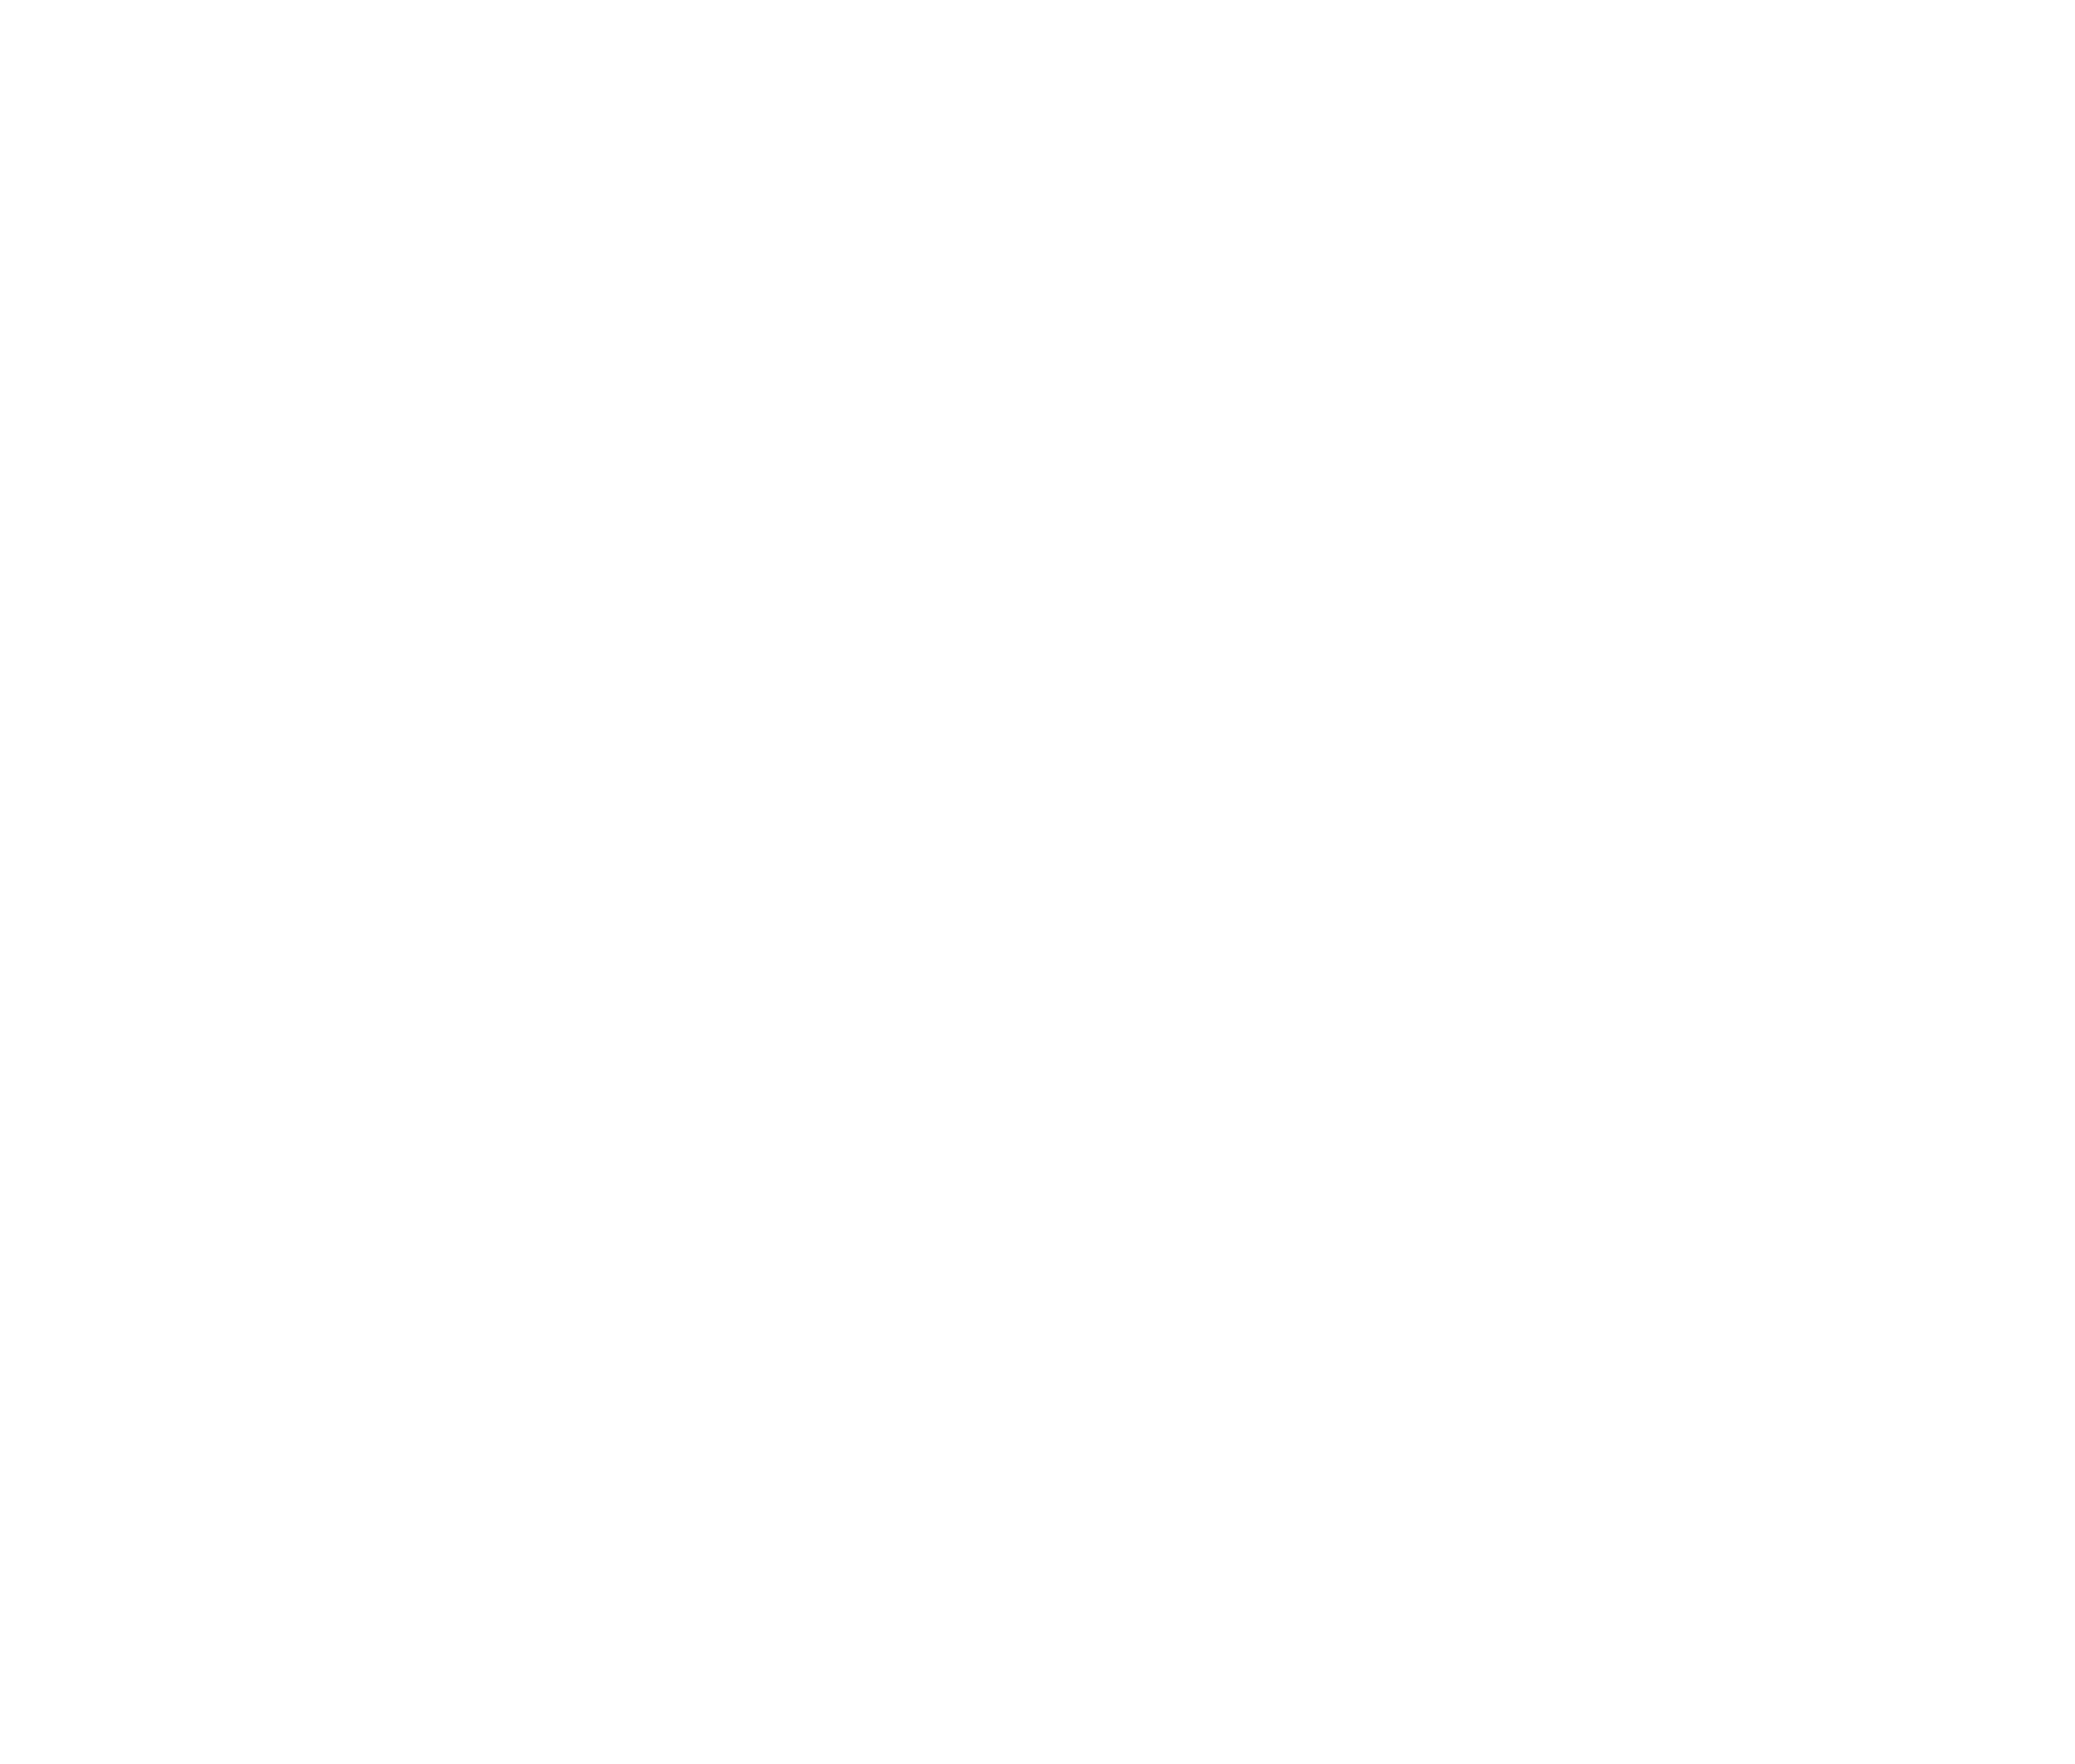 Logo movistar